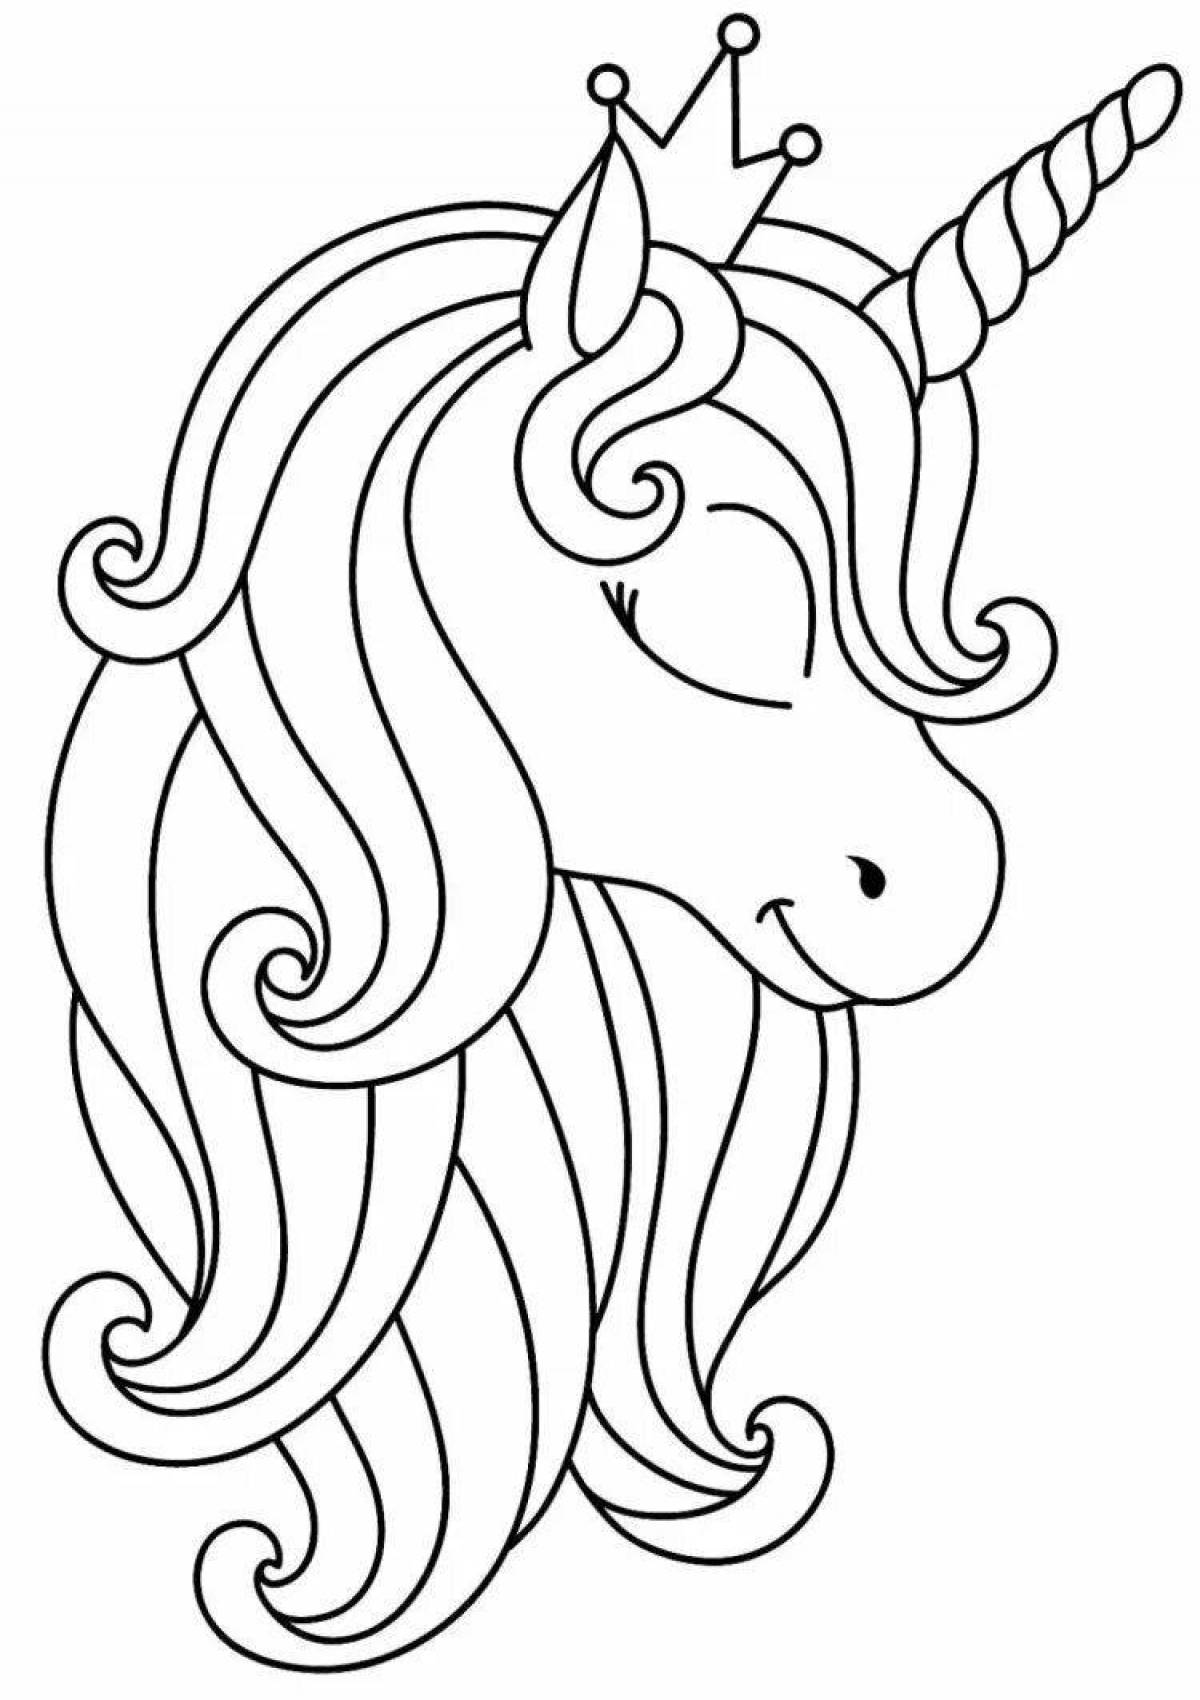 Coloring page happy unicorn dog